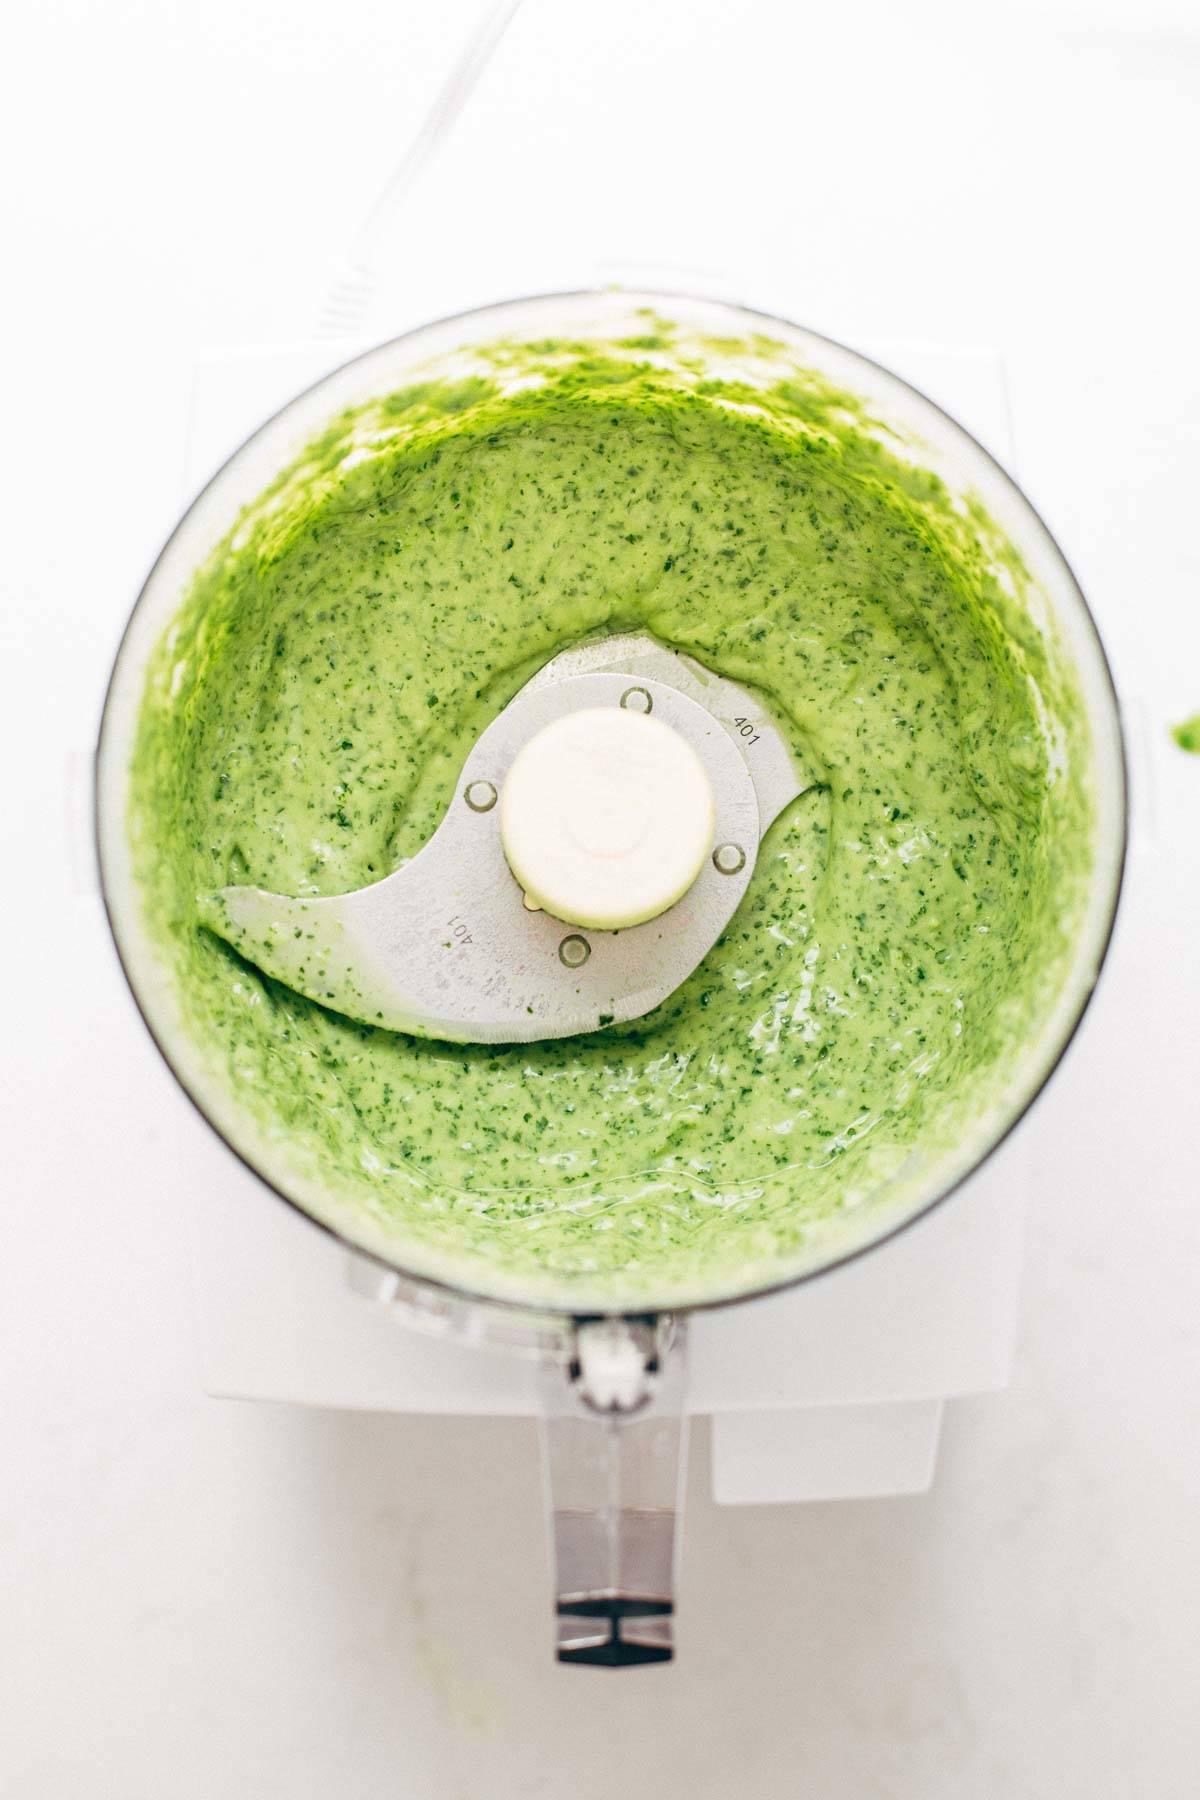 5 Minute Cilantro Avocado Dressing - made with easy ingredients like cilantro, avocado, Greek yogurt, garlic, and lime juice. | pinchofyum.com